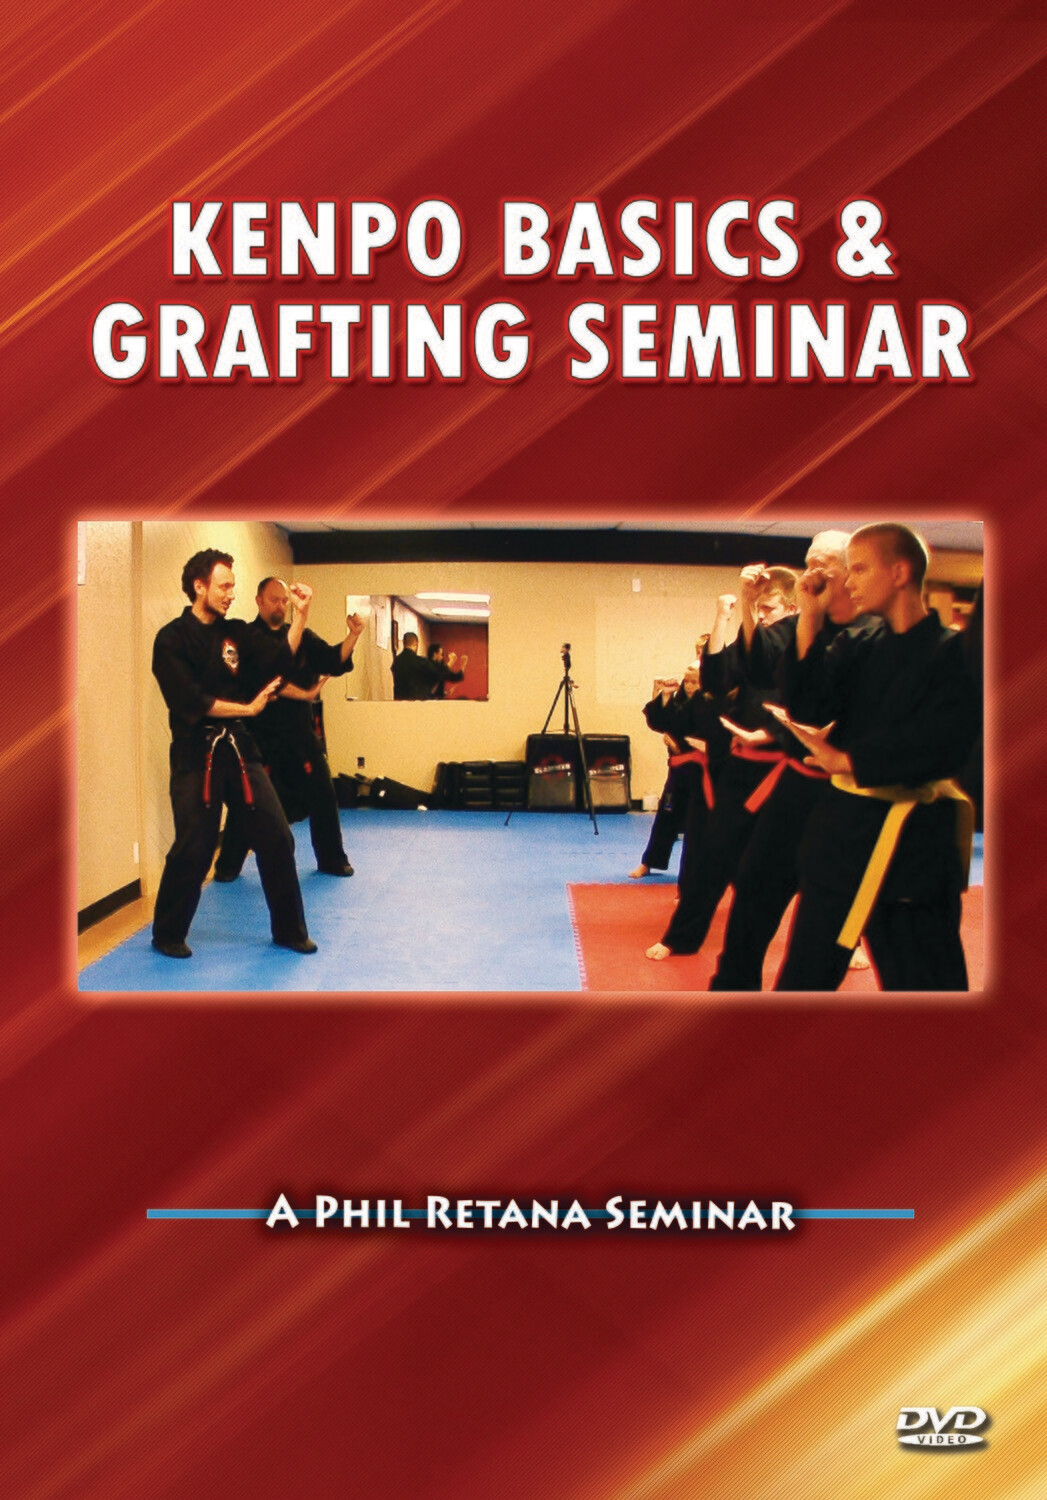 Kenpo Basics & Grafting Seminar DVD